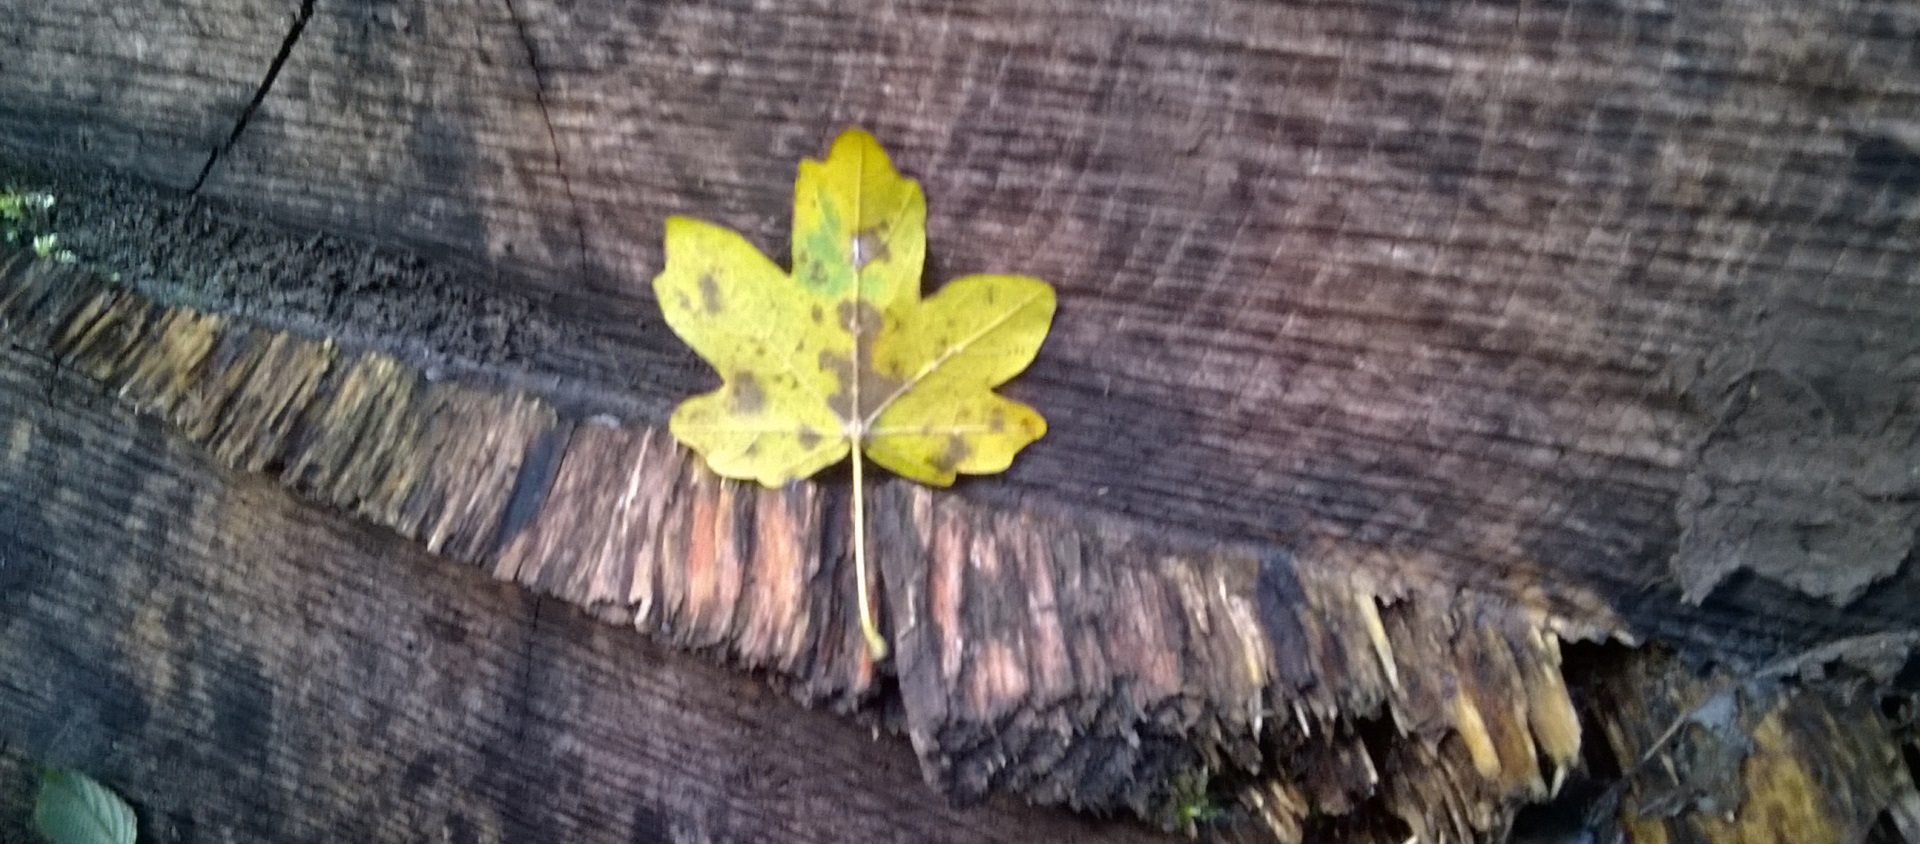 A leaf on a log